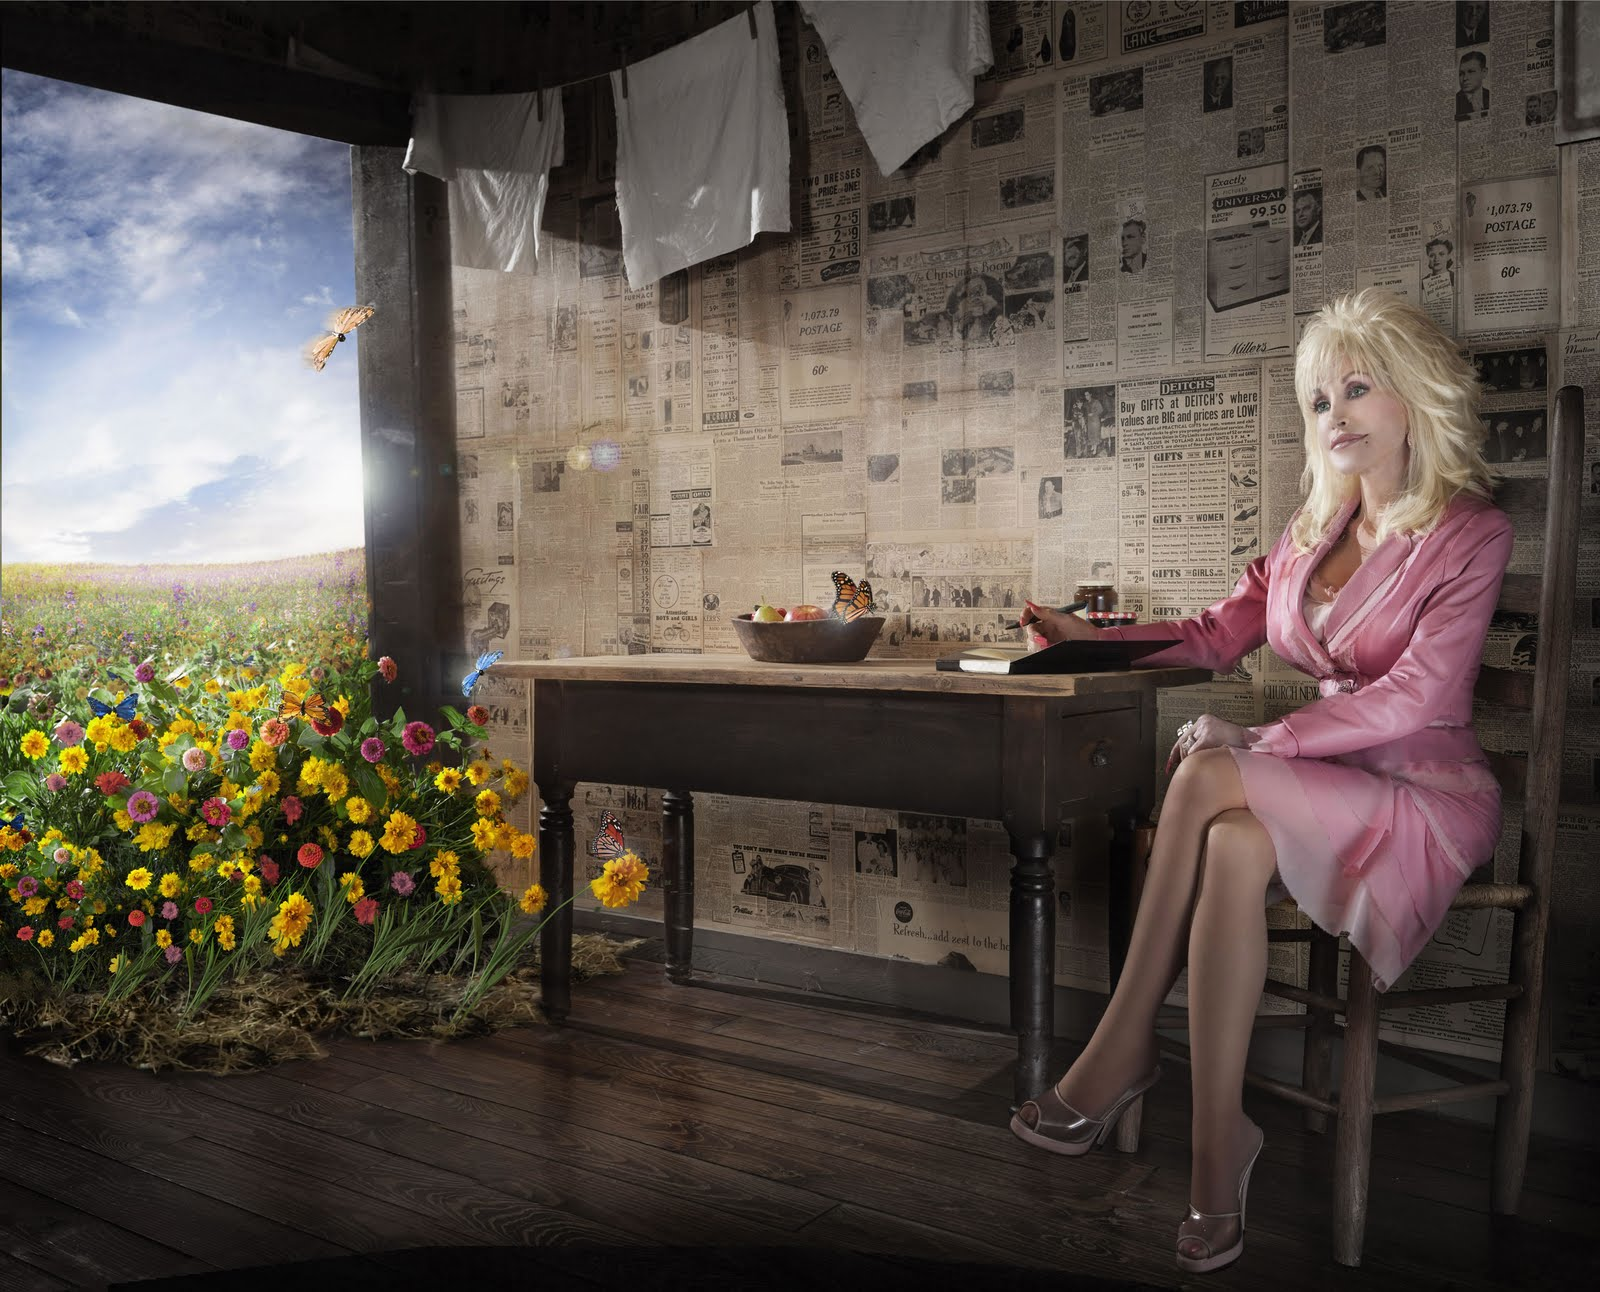 Dolly Parton Lyrics, Music, News and Biography | MetroLyrics1600 x 1292